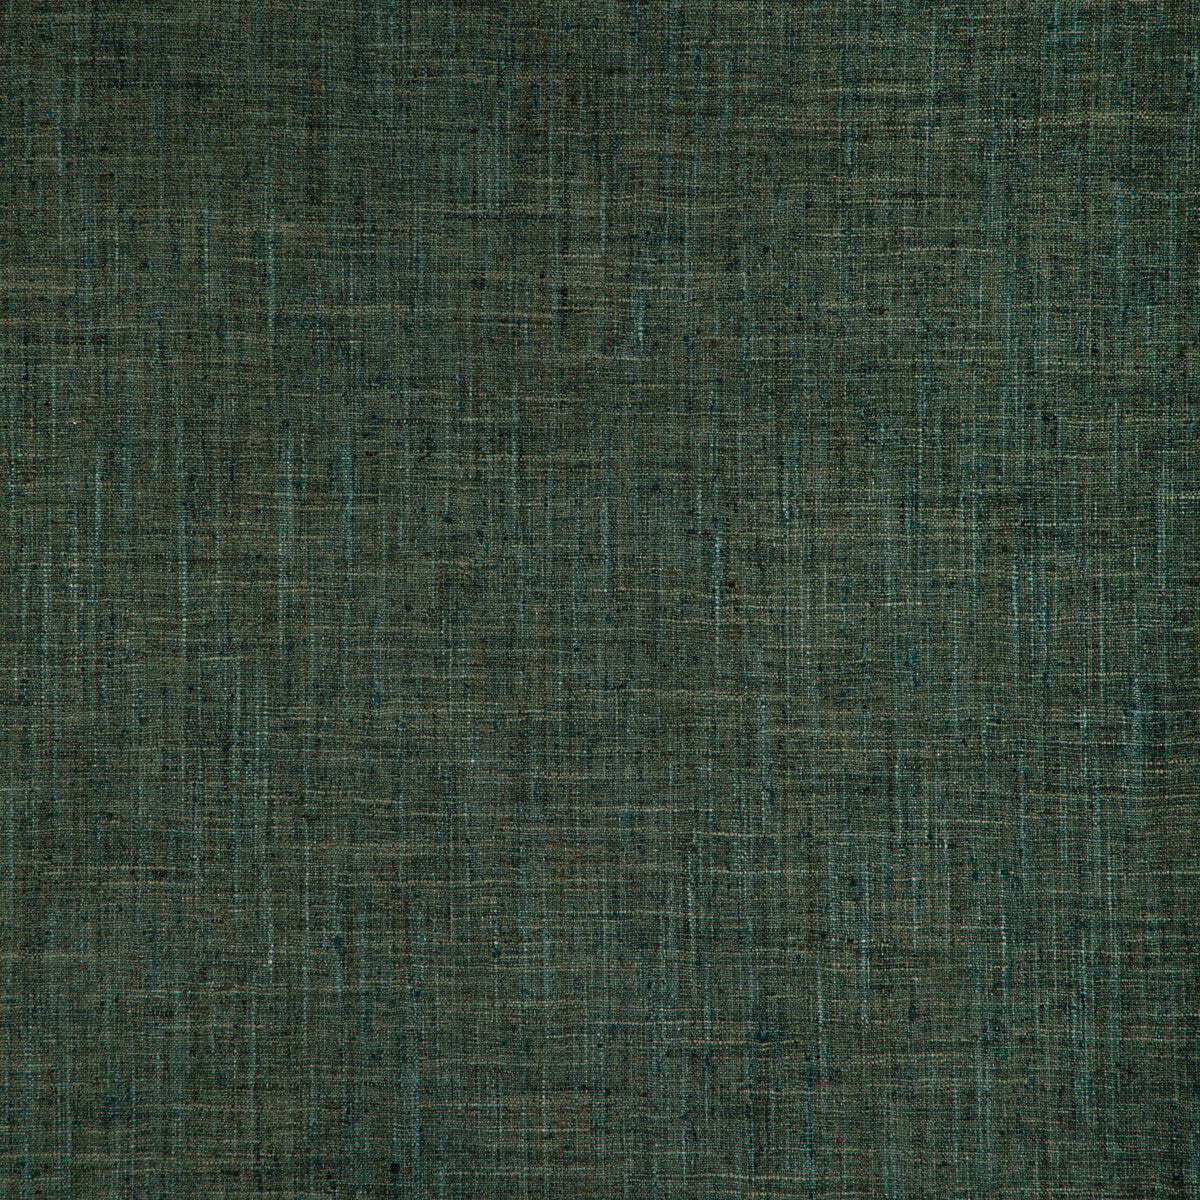 Kravet Smart fabric in 34983-316 color - pattern 34983.316.0 - by Kravet Smart